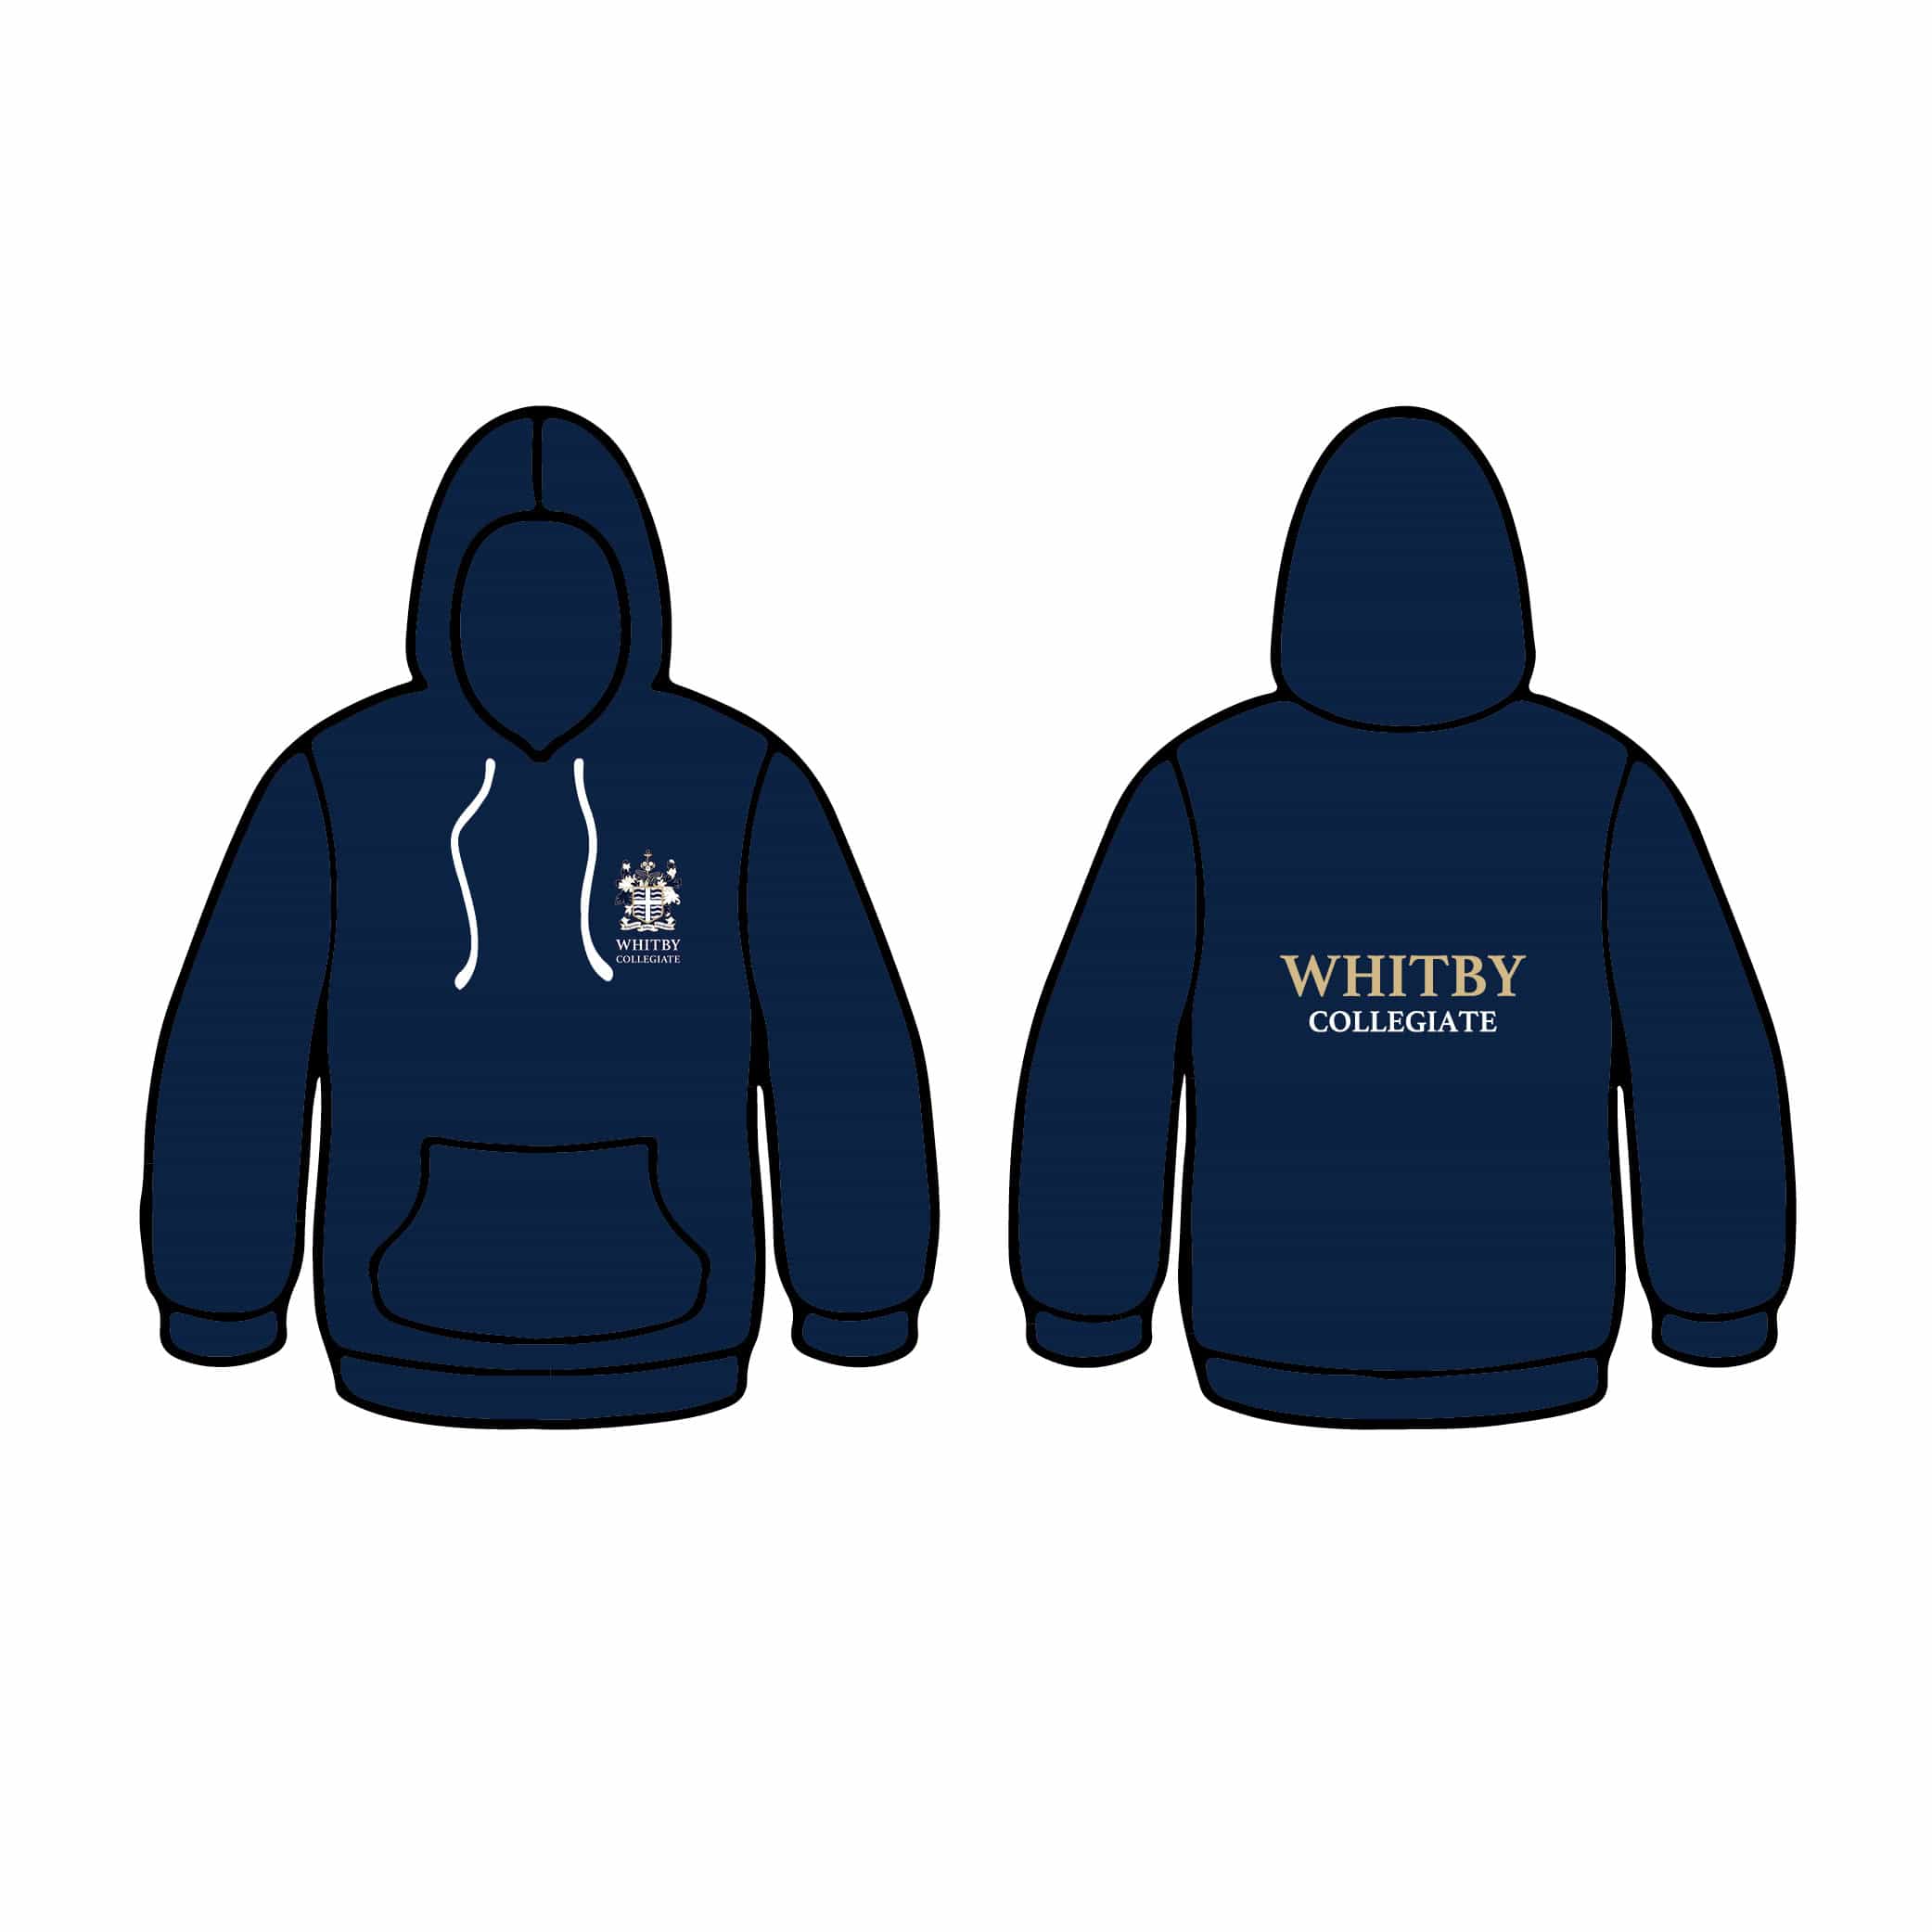 Whitby Collegiate - Uniform